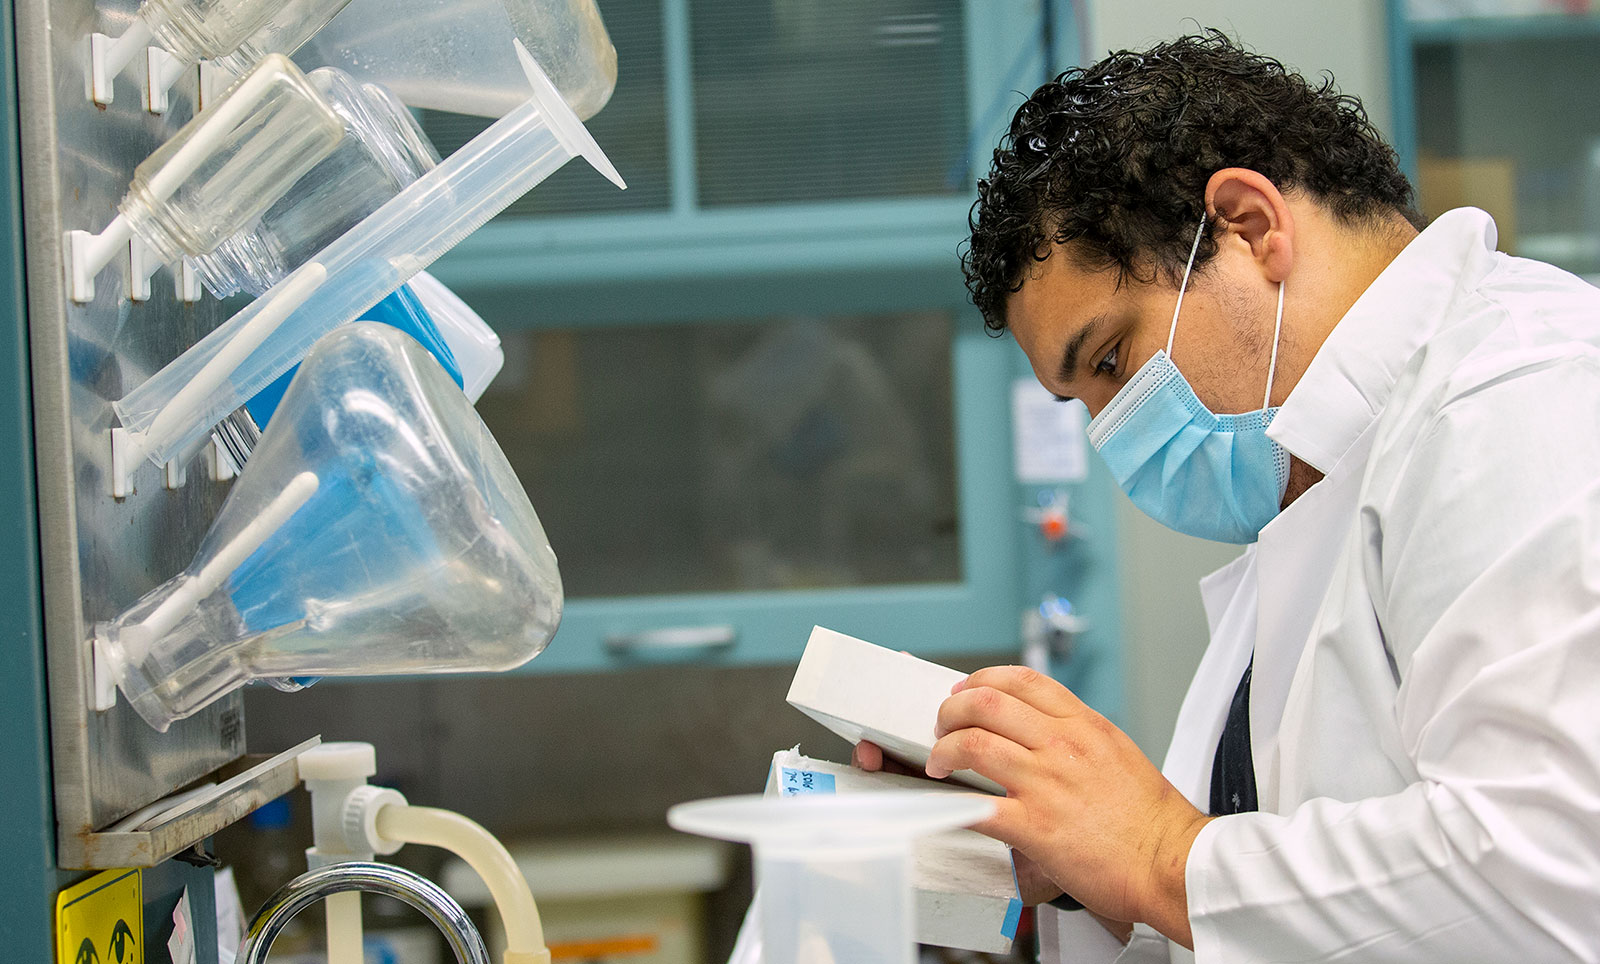 Biomedical Sciences PhD student Joseph Cirilo is seen in a College of Medicine laboratory in March 2020.